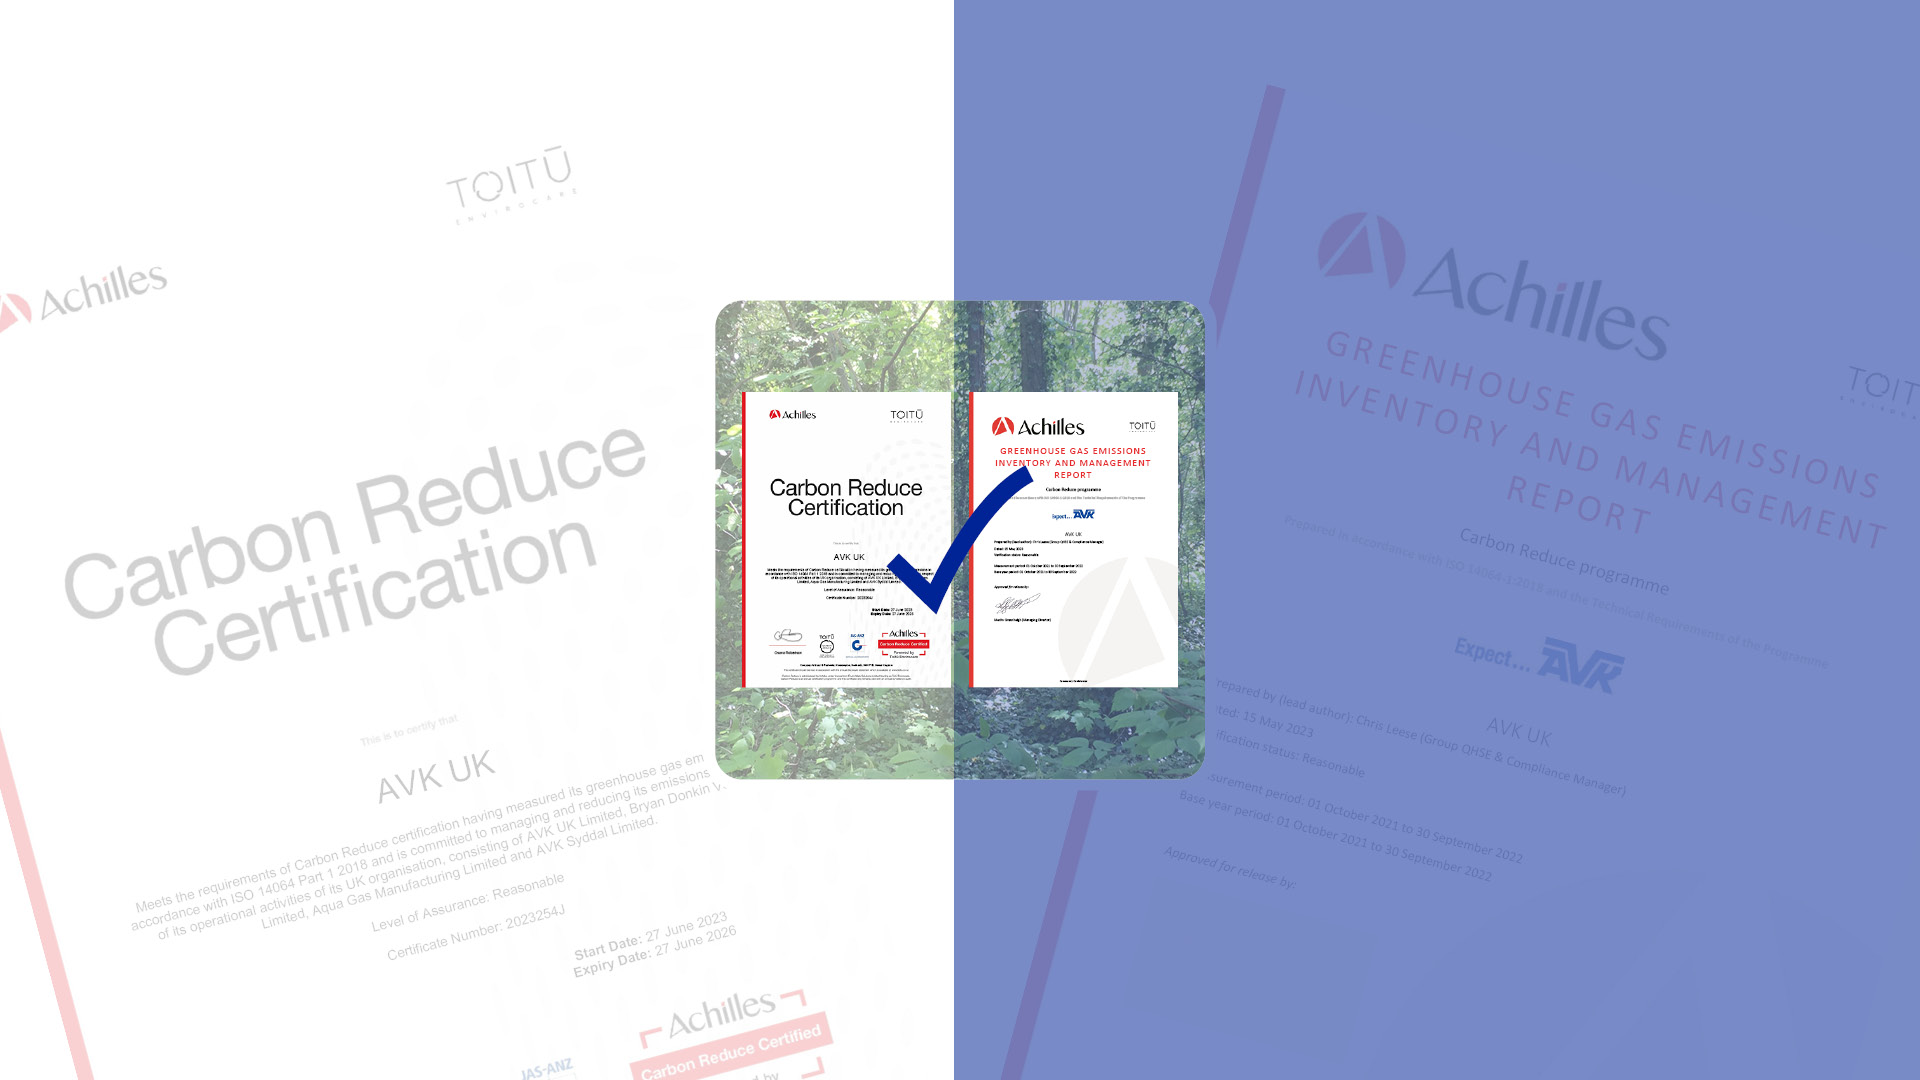 Achilles Certificate - Carbon Reduce AVK UK ISO 14064